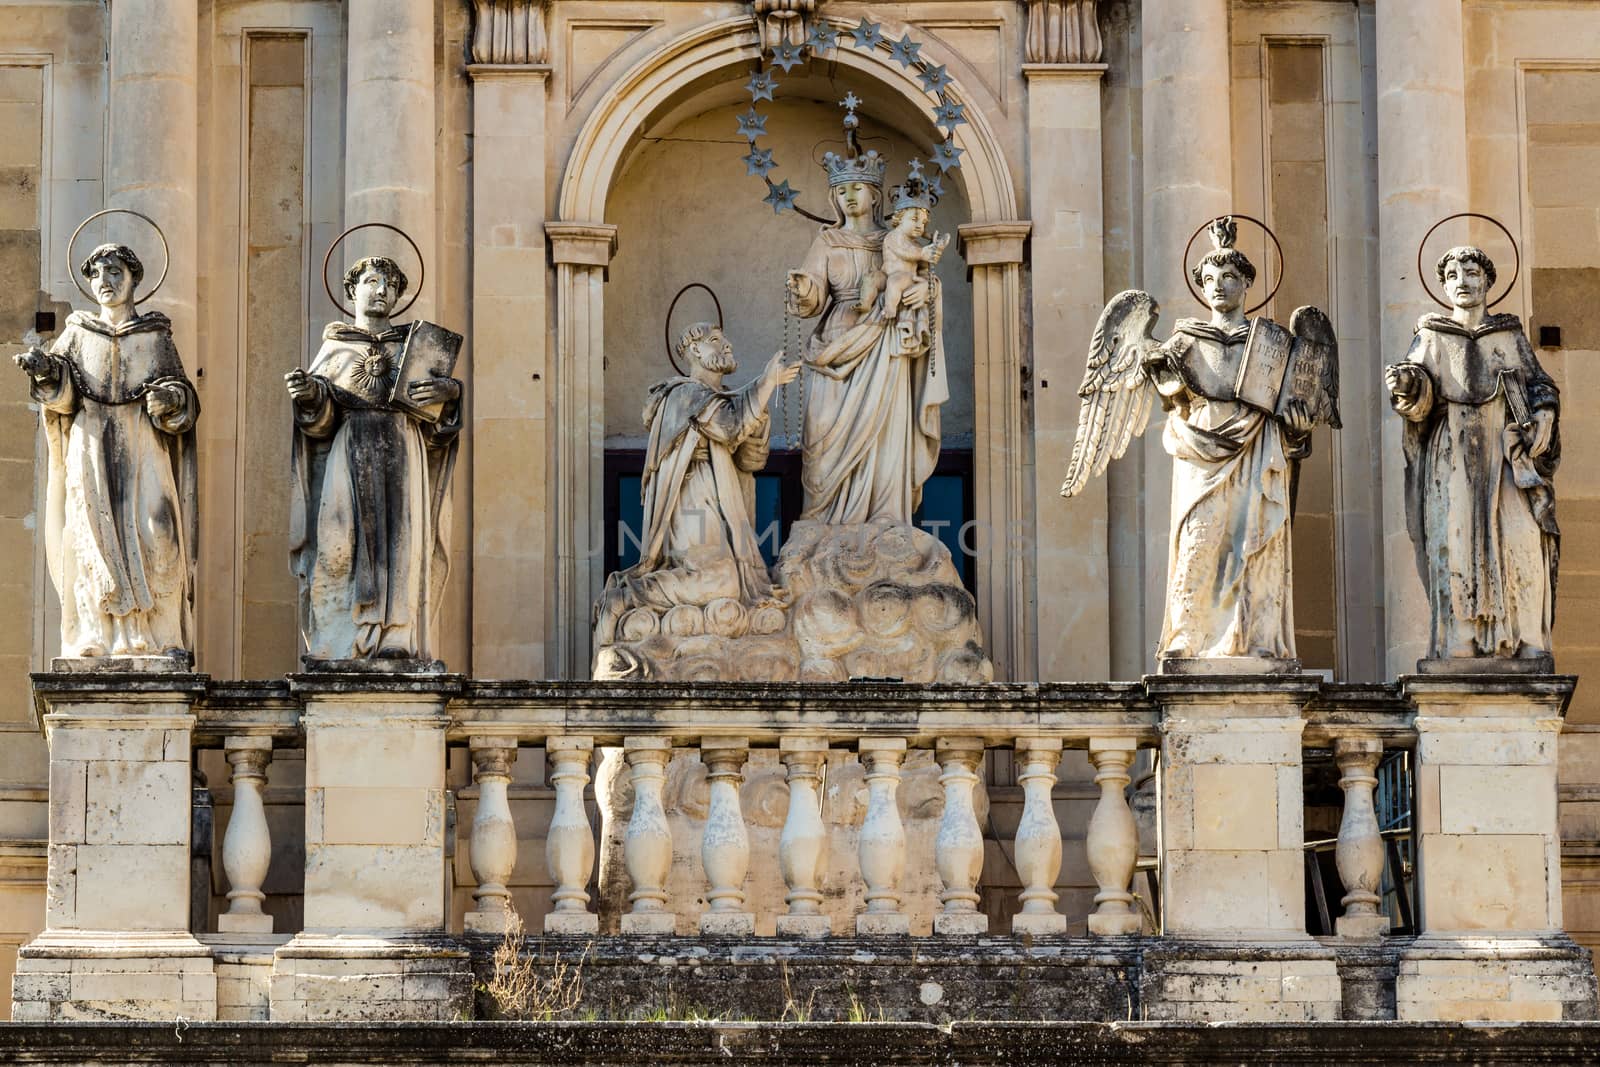 Detail of a statue in a Sicilian baroque church